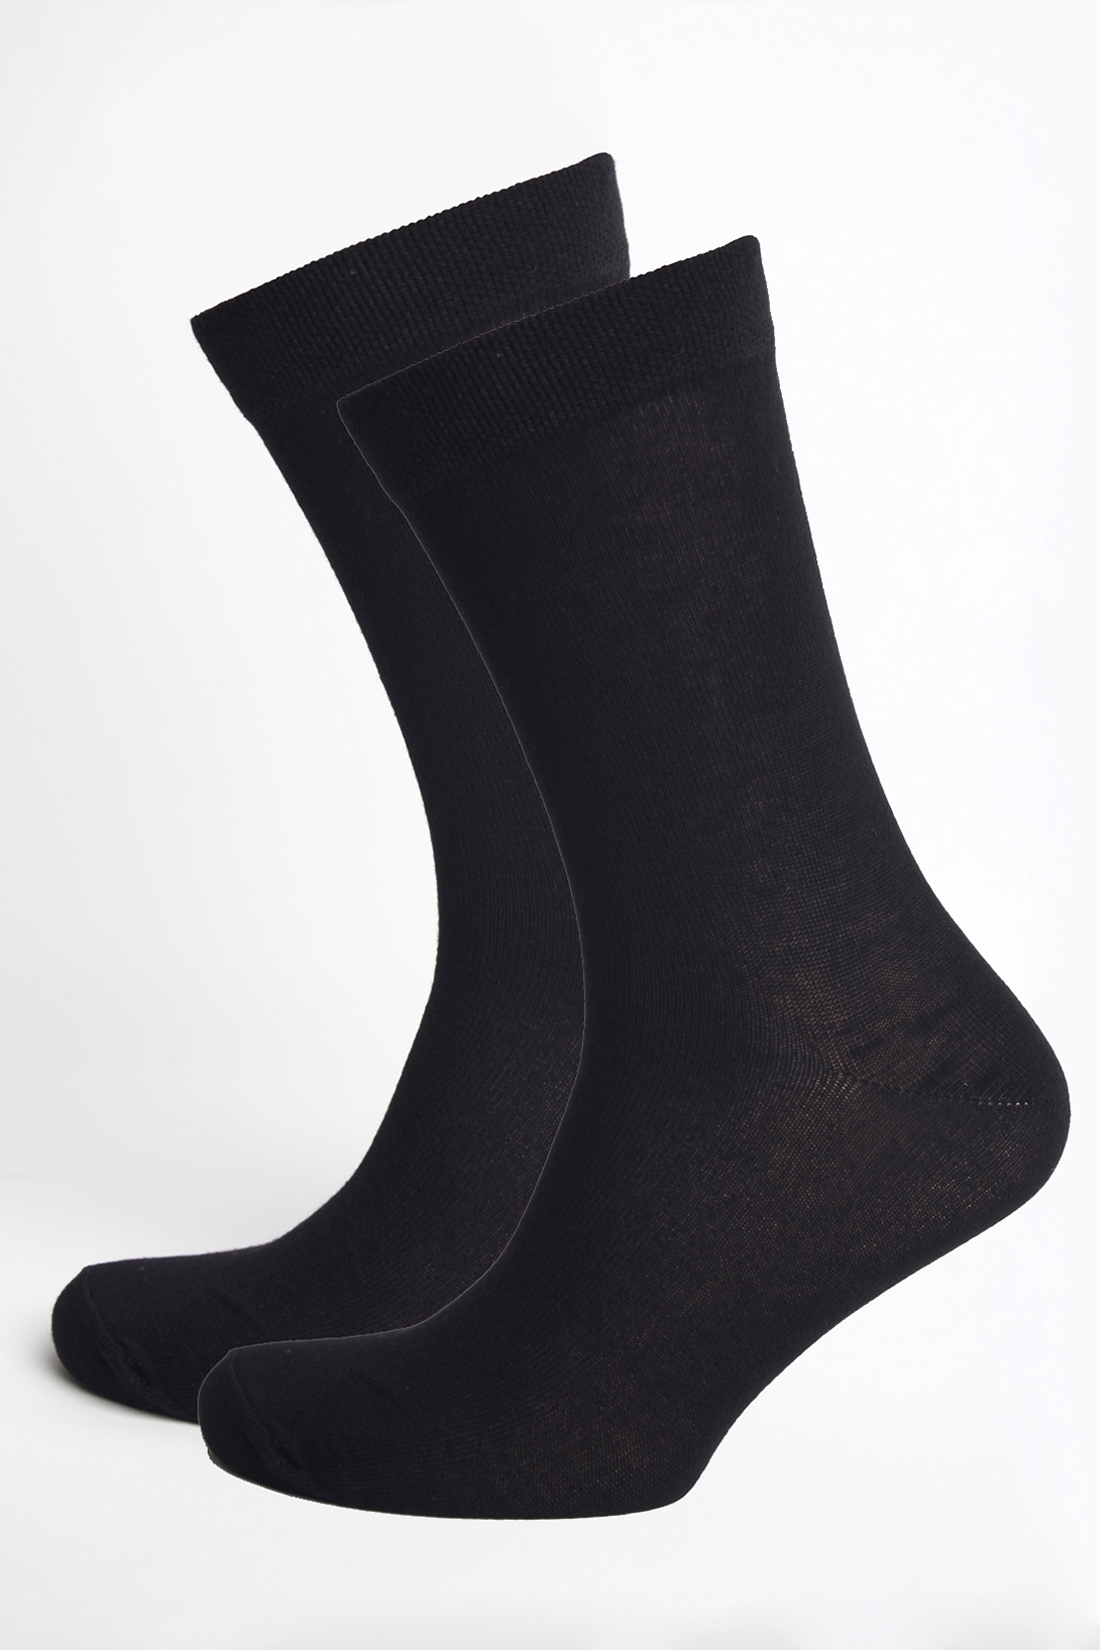 Мужские носки, 2 пары (арт. baon B891108), размер 43/45, цвет черный